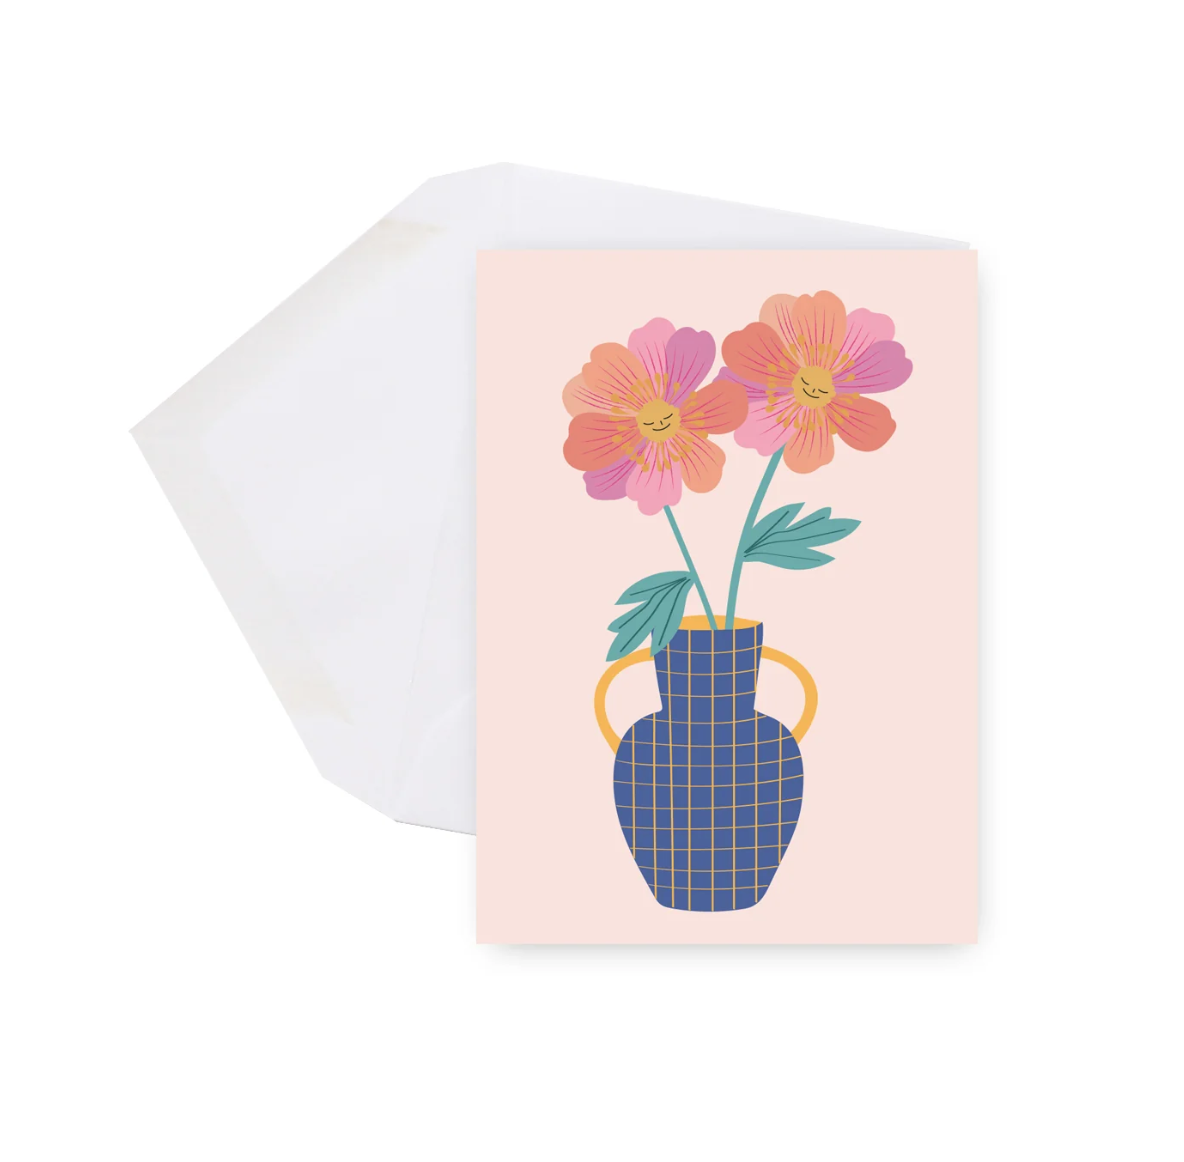 Mini card - Vase